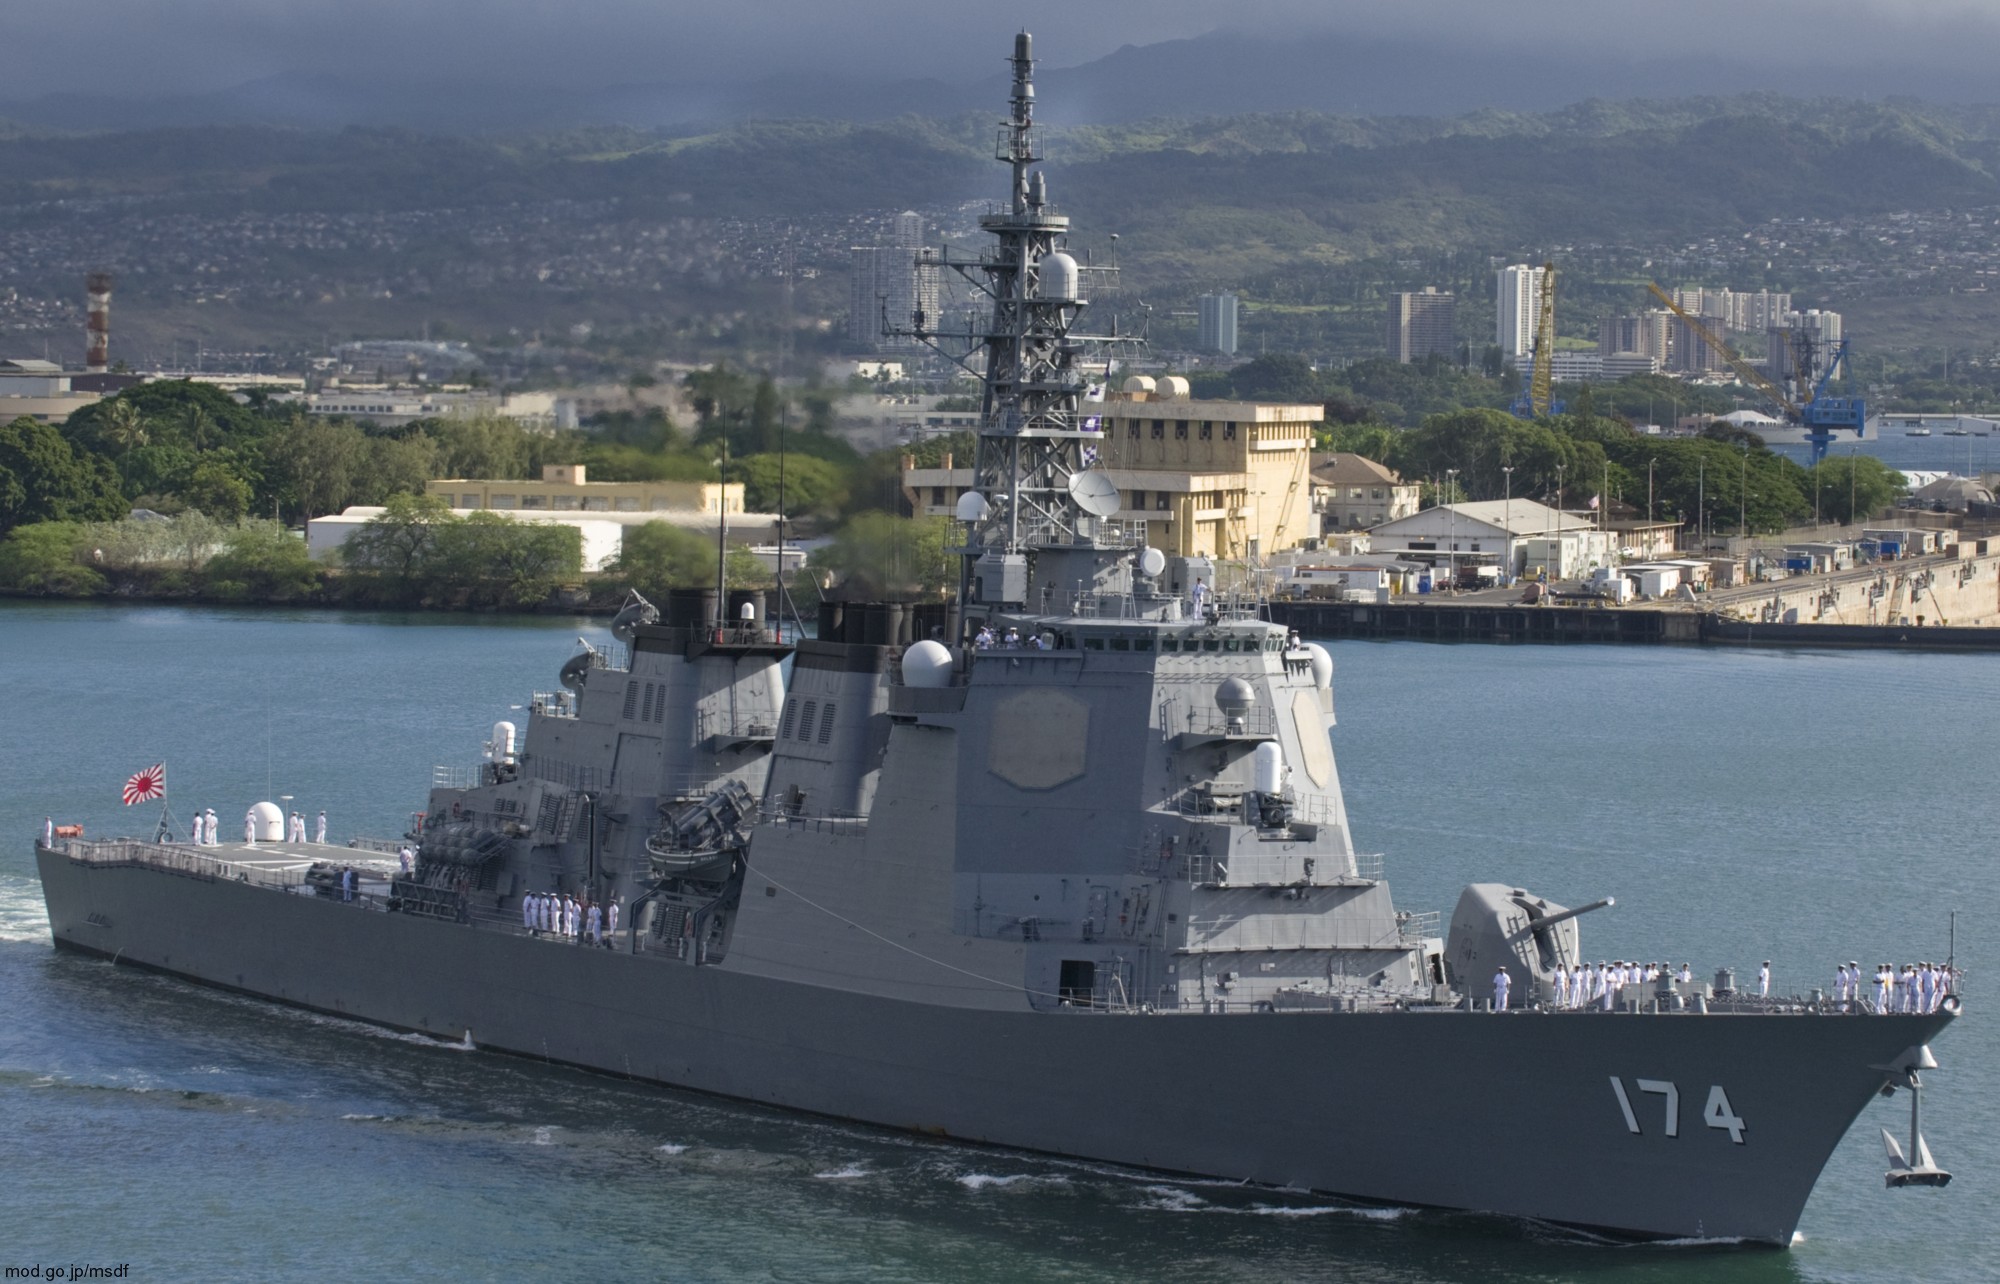 ddg-174 jds kirishima kongou class destroyer japan maritime self defense force jmsdf 05 rimpac hawaii